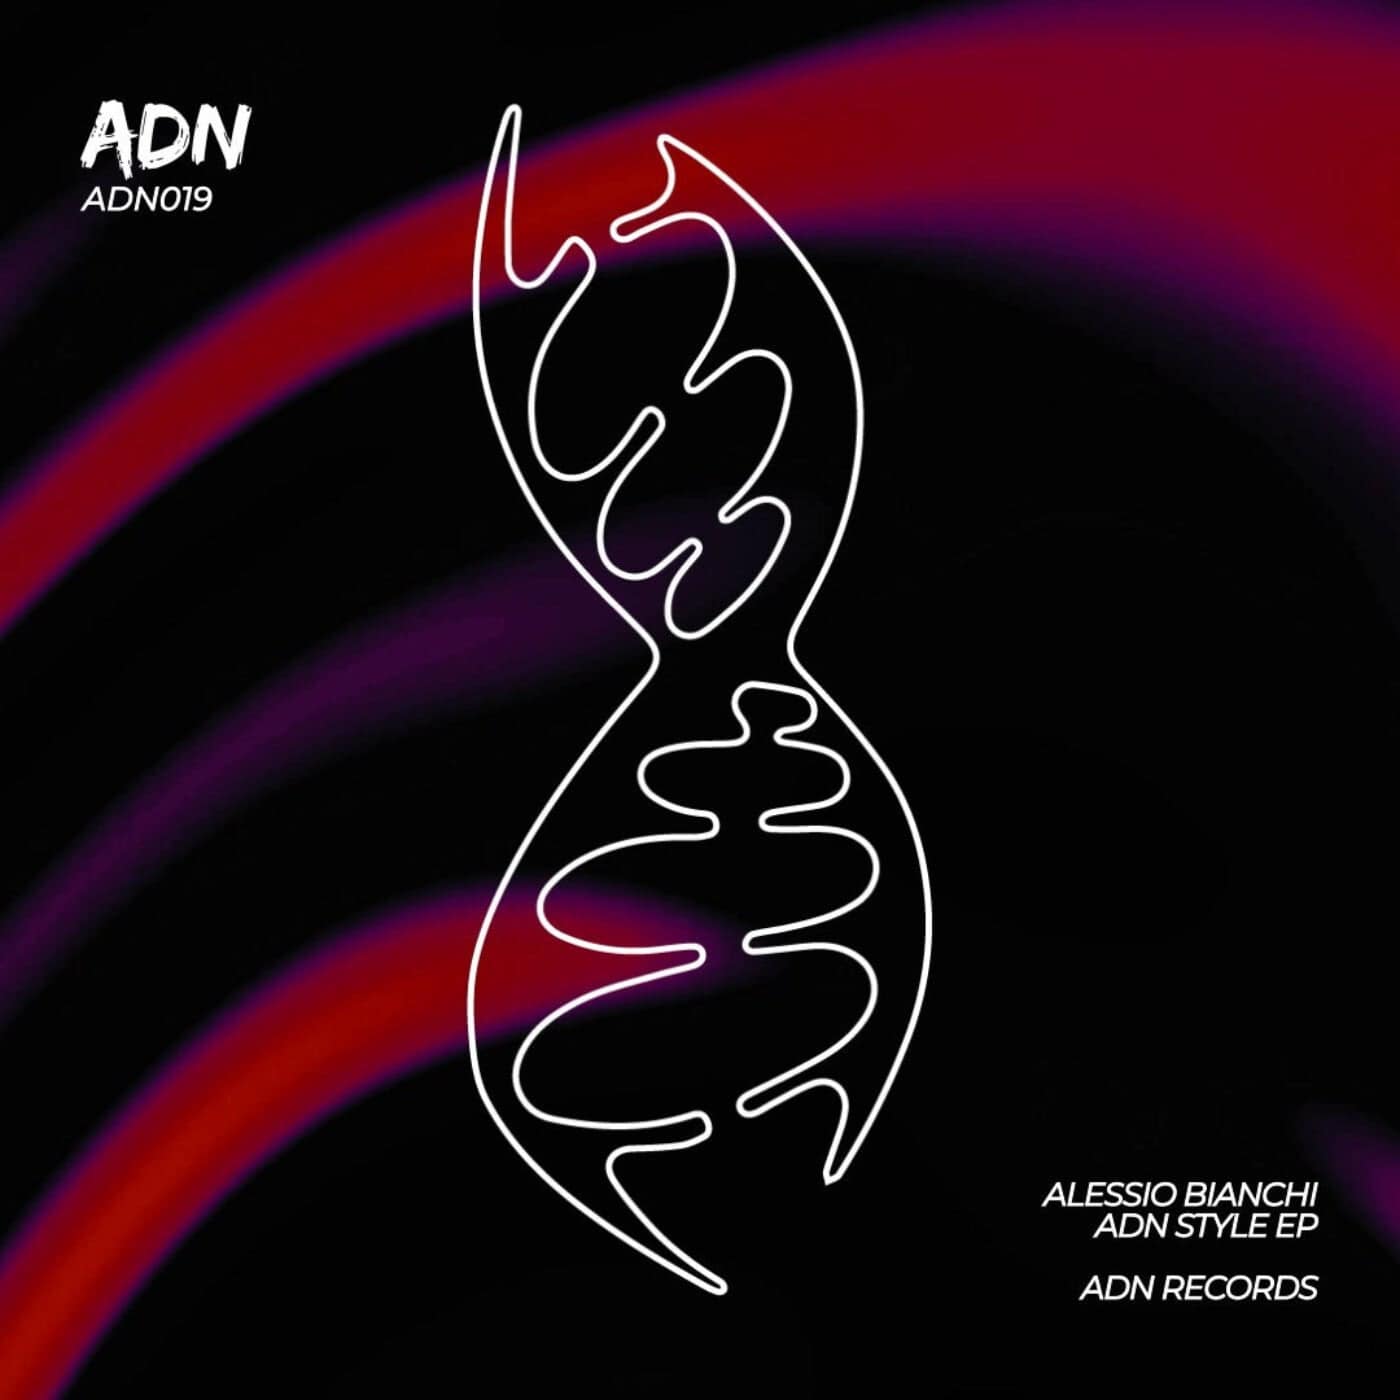 image cover: Alessio Bianchi - ADN Style EP / ADN019